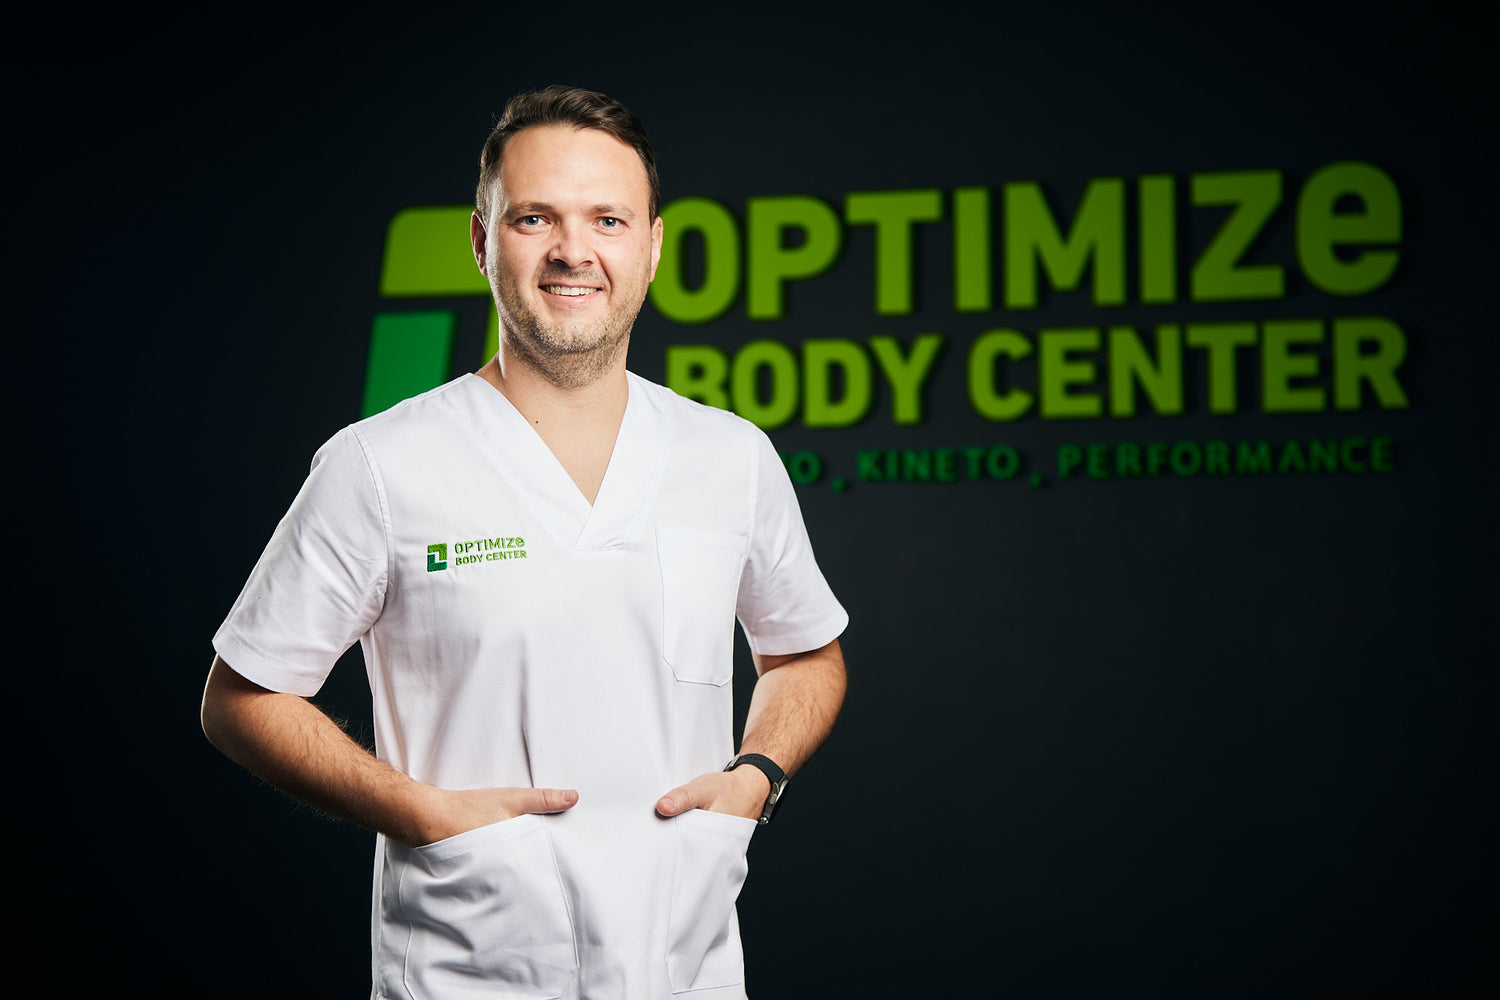 dr. Hiohi Optimize Body Center